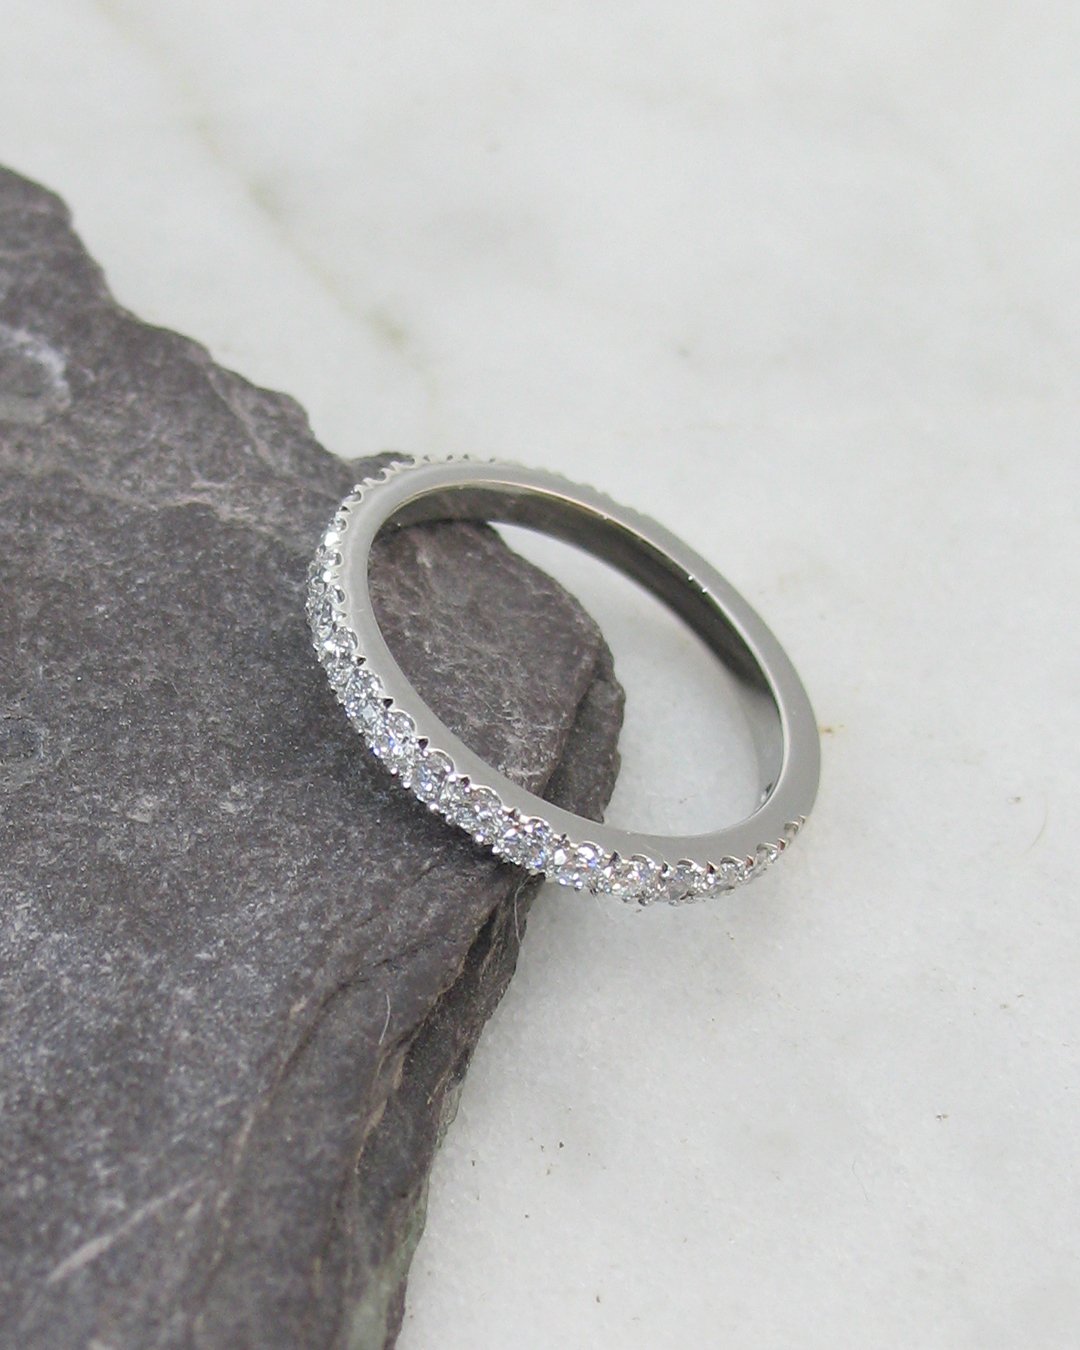 An elegant diamond eternity ring